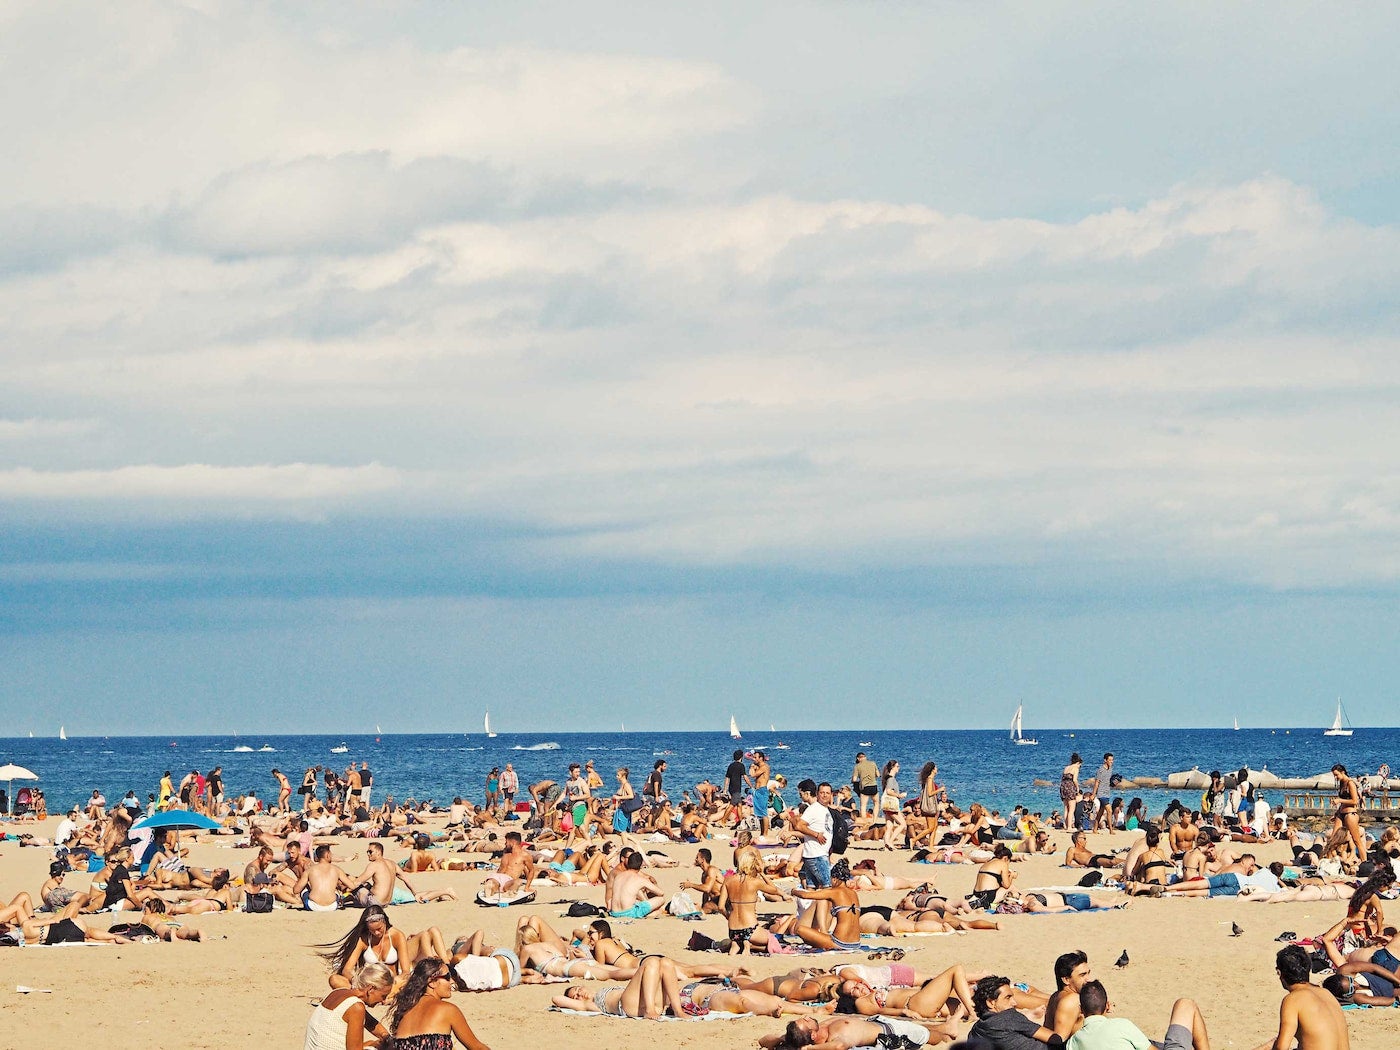 Crowd sunbathing on the beach.